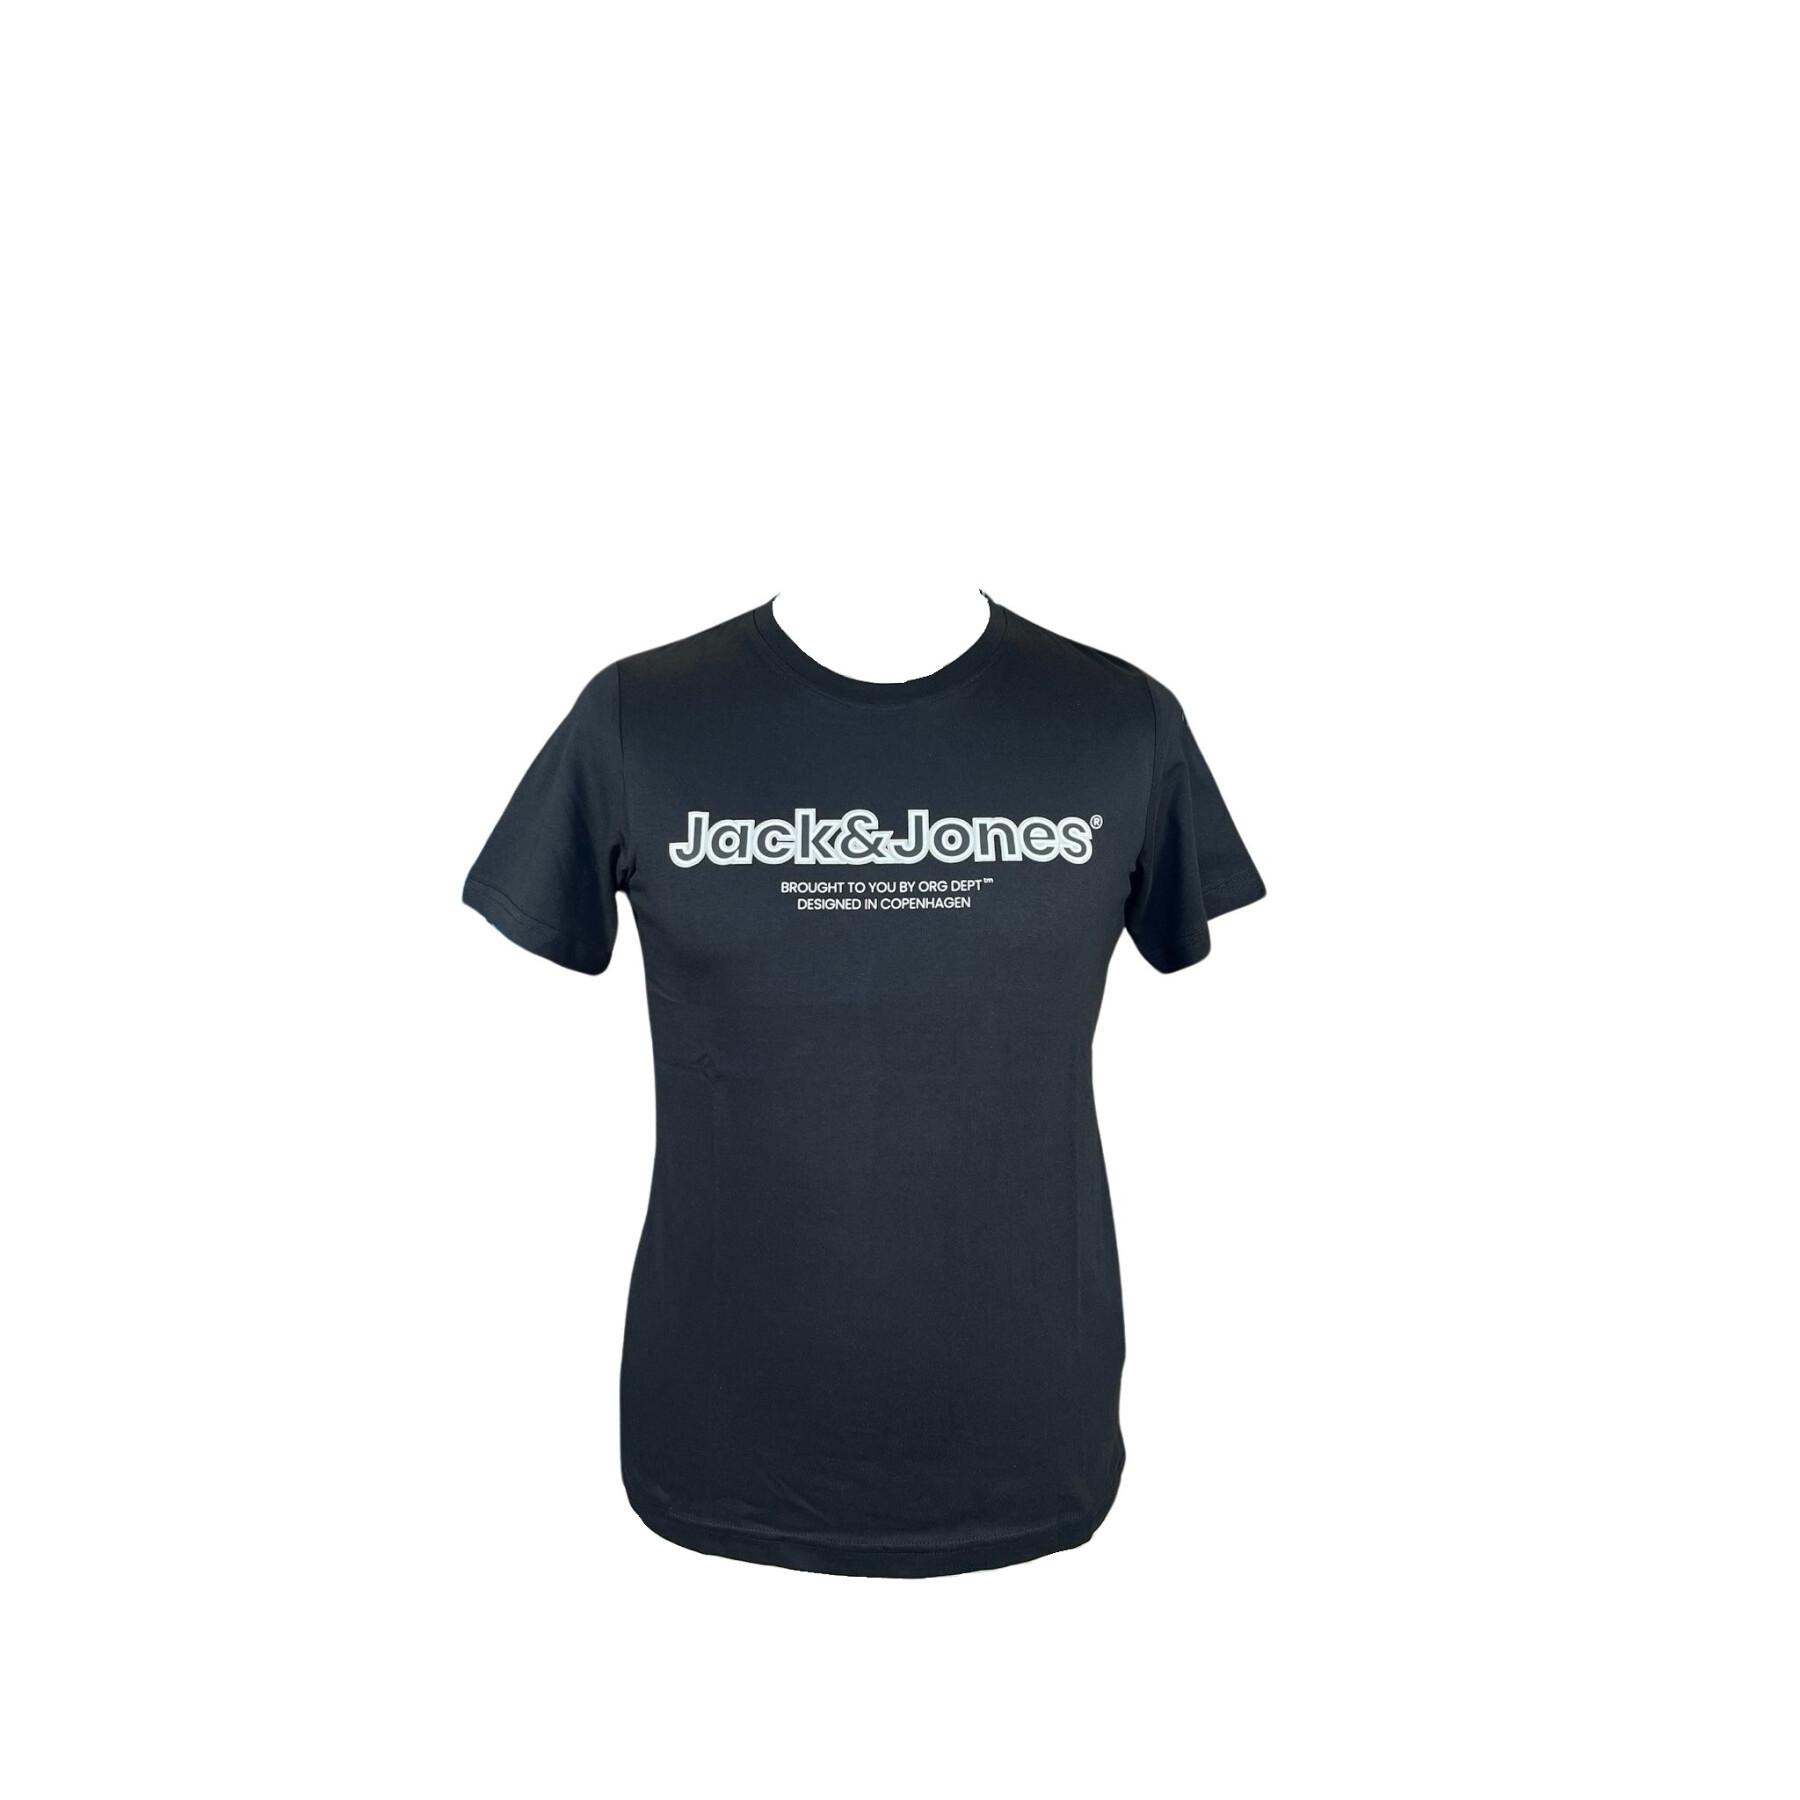 Kinder-T-shirt Jack & Jones Jorlakewood Branding BF